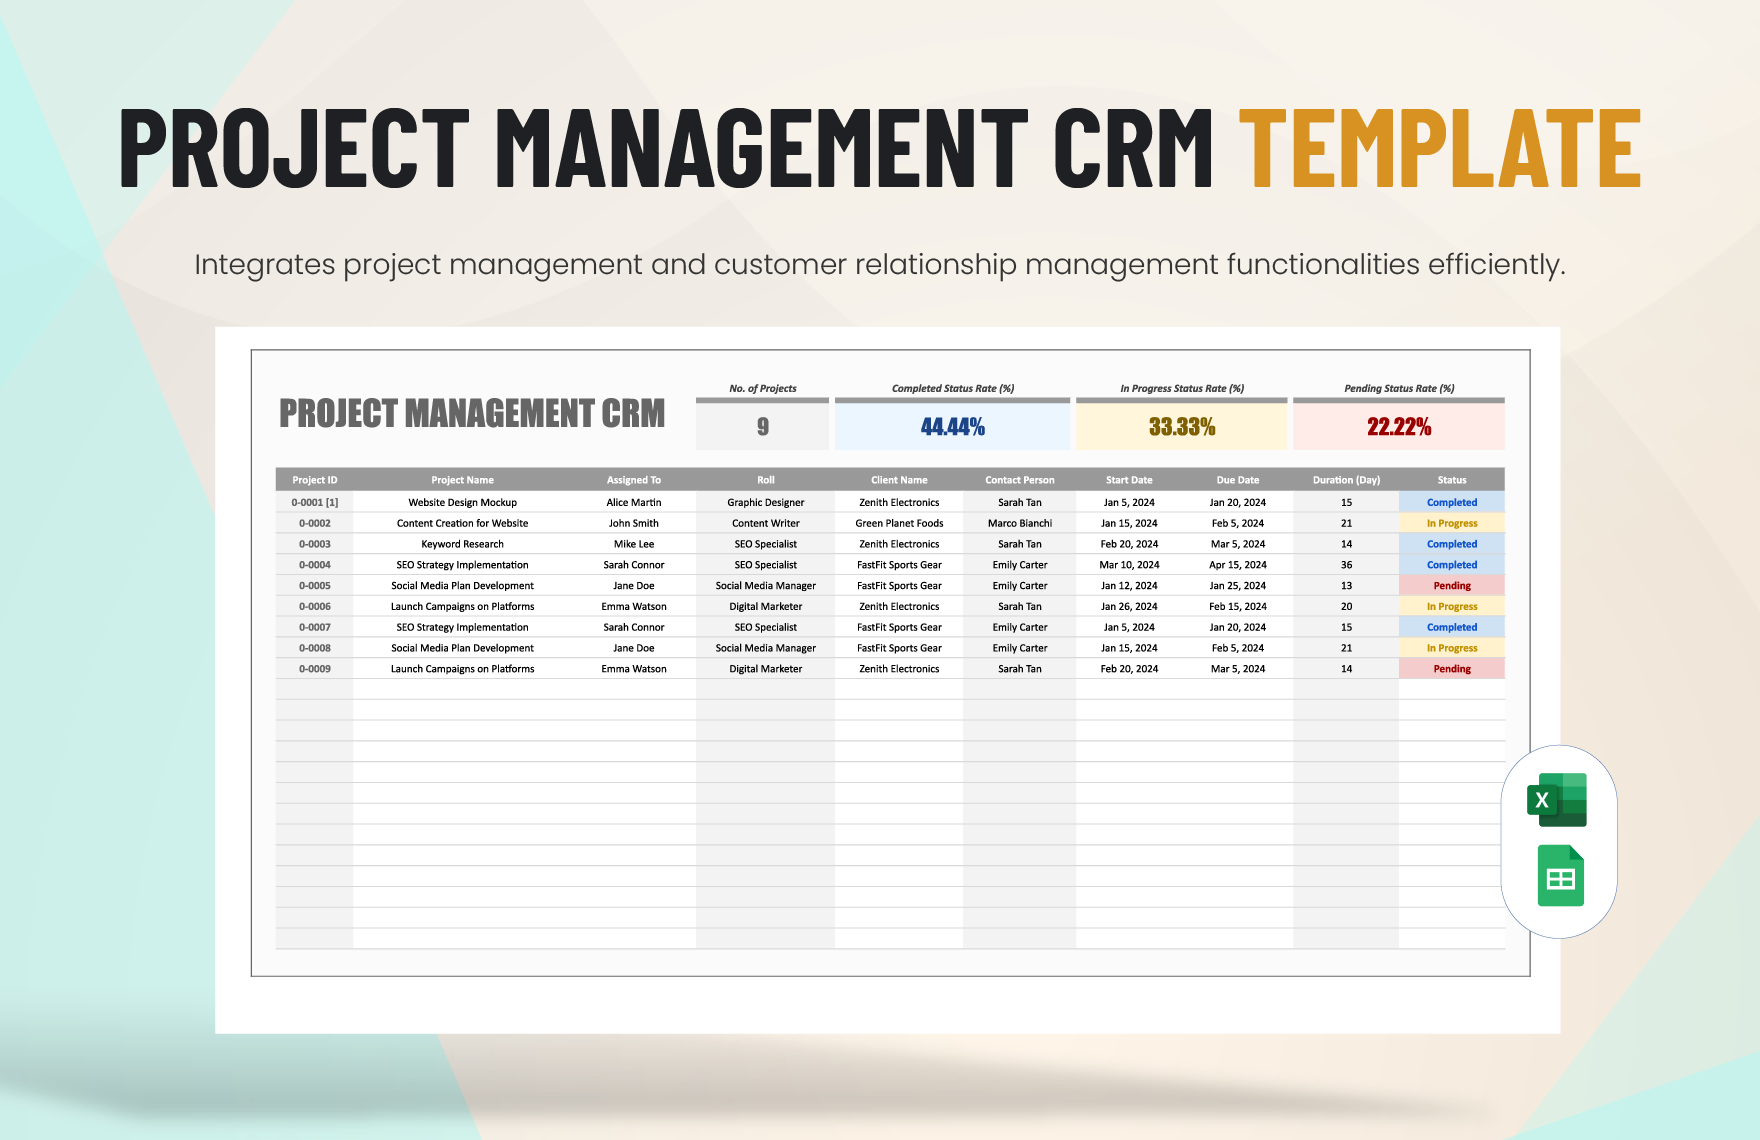 Project Management CRM Template